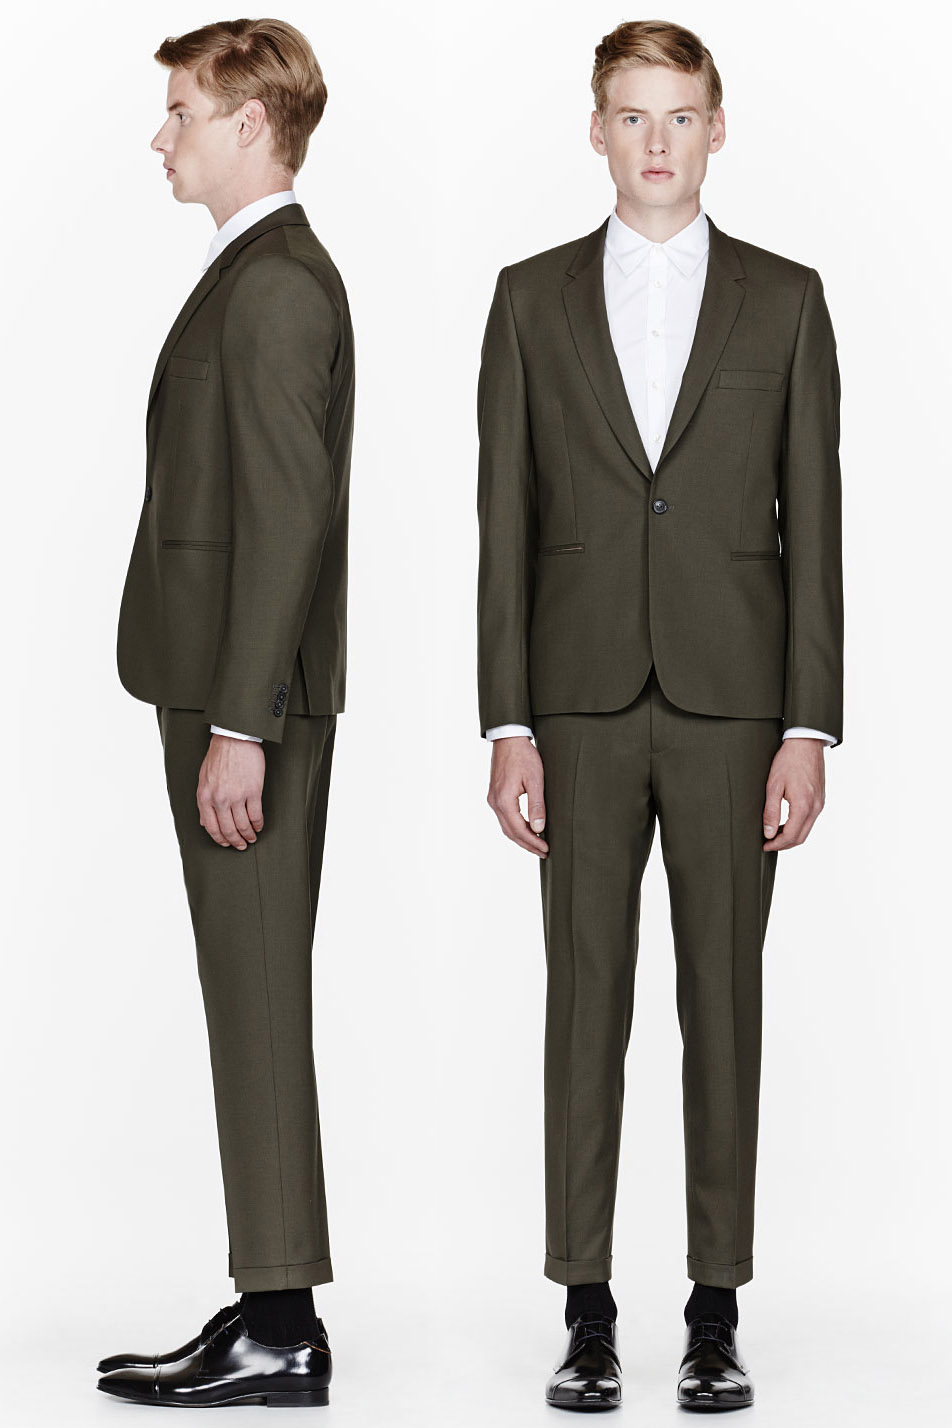 Modern Olive Green Suit men style